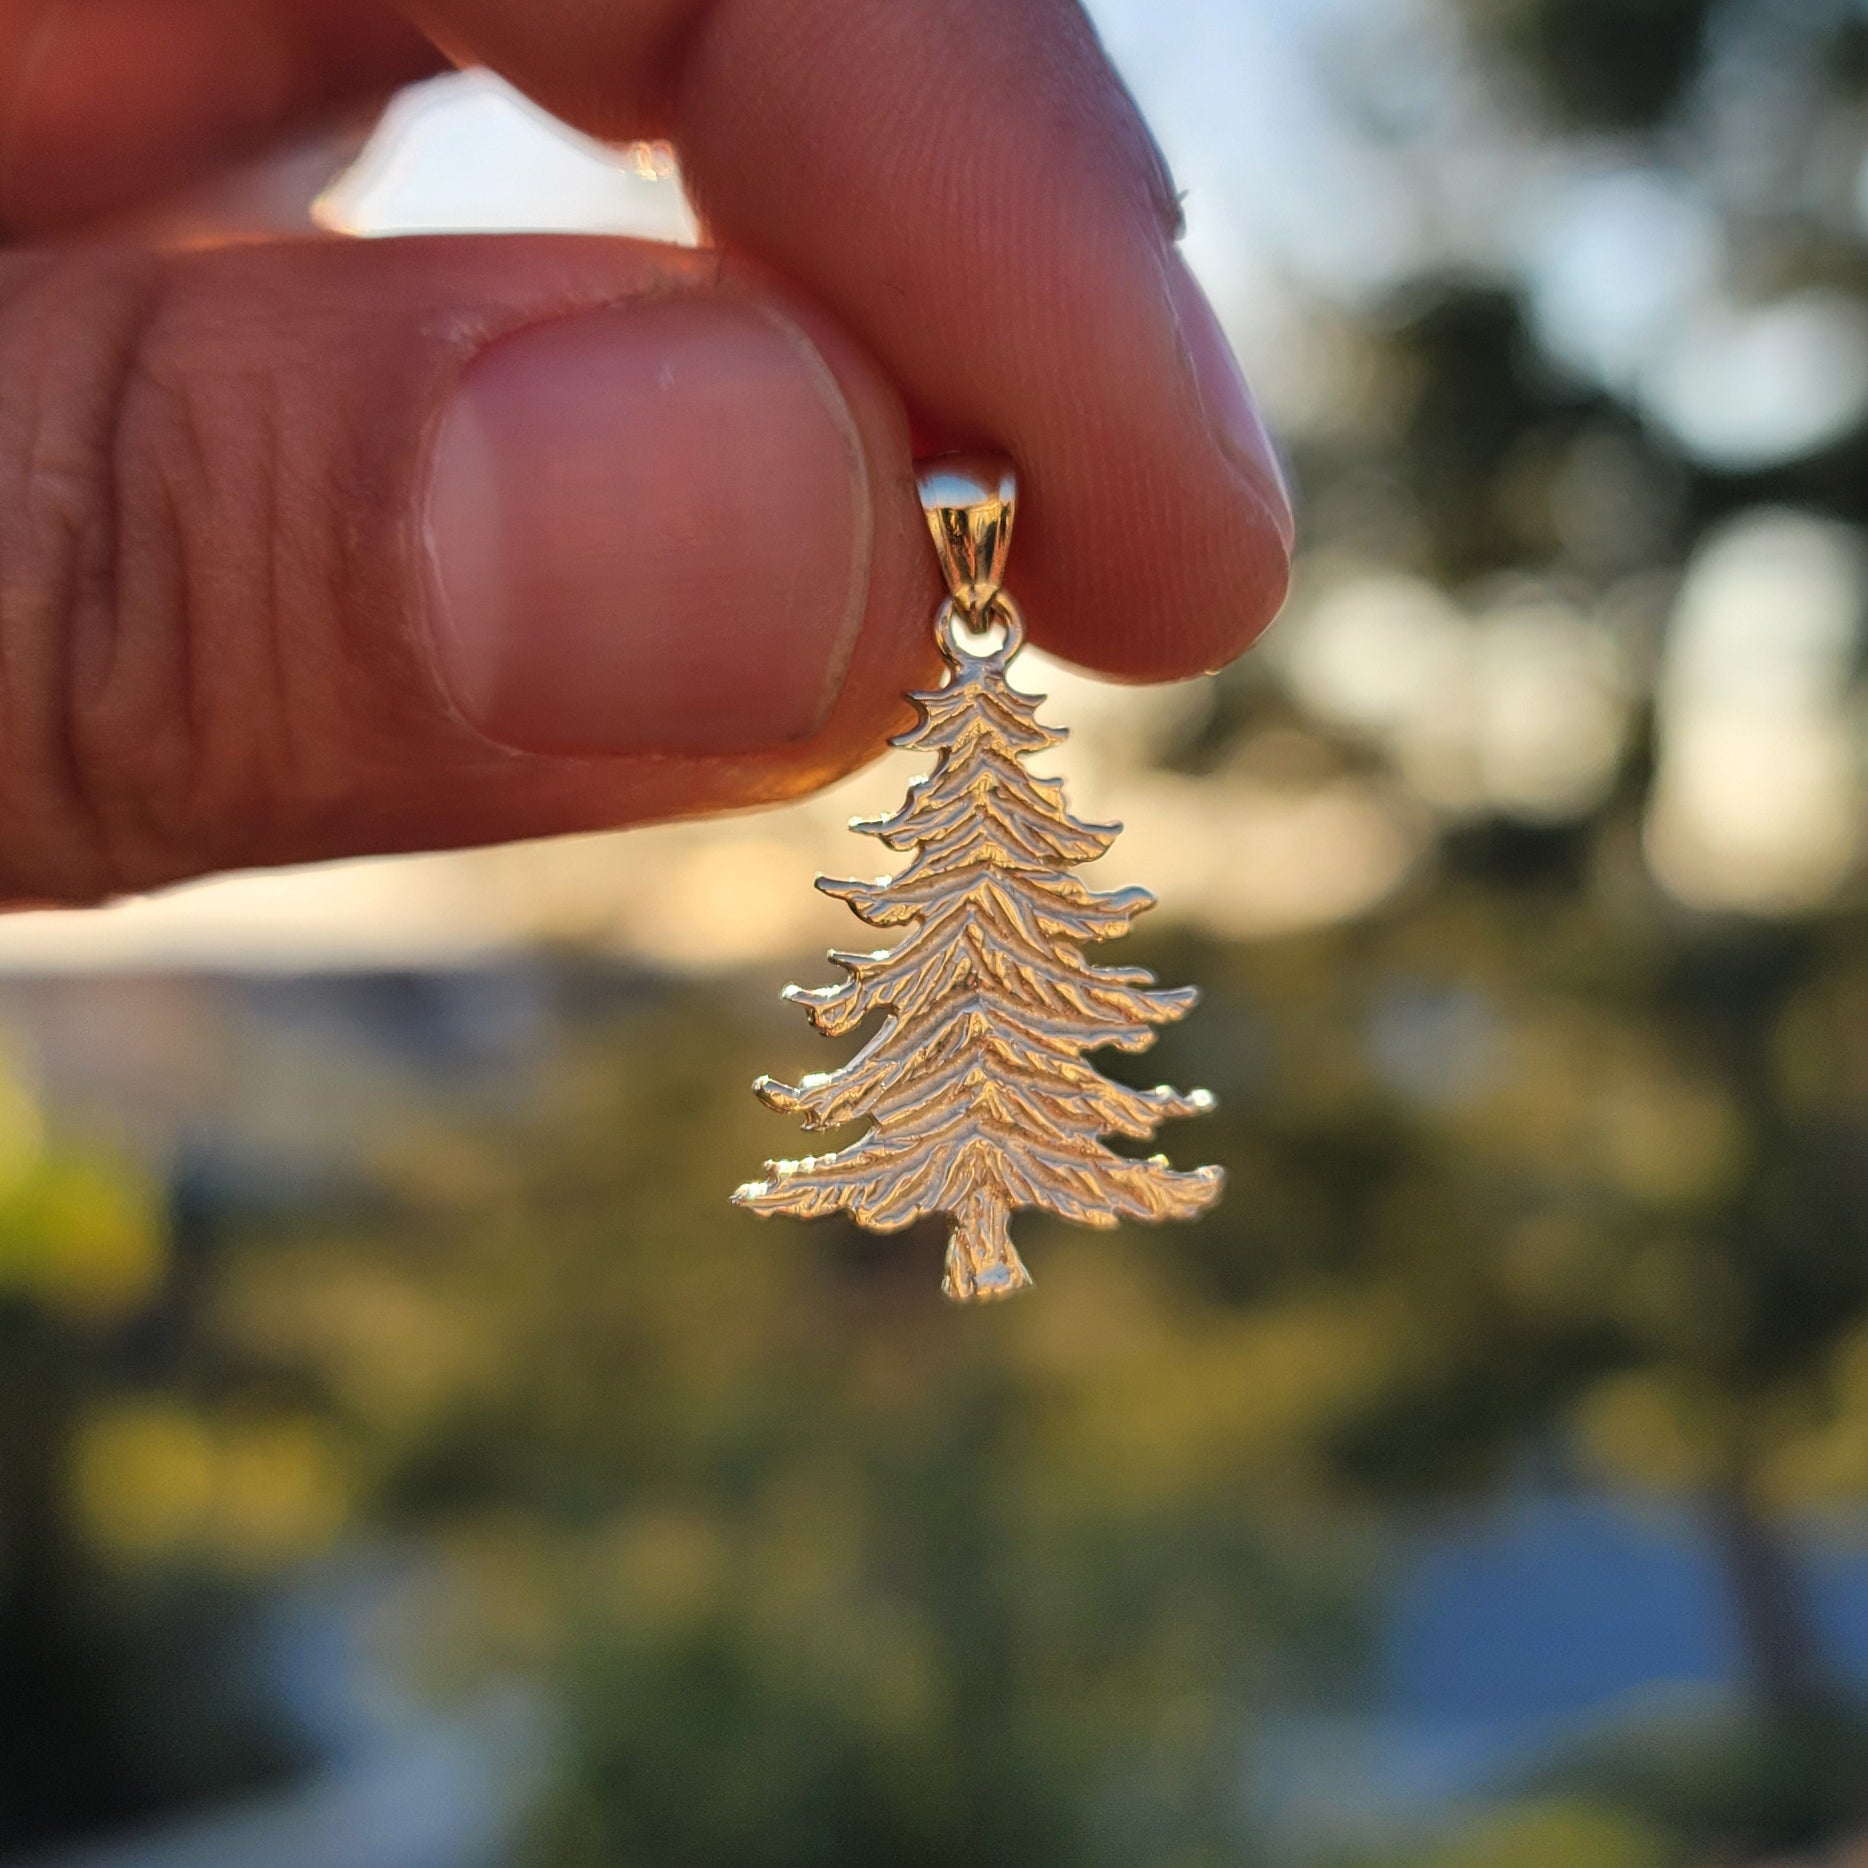 14K or 18K Gold Christmas Tree Pendant